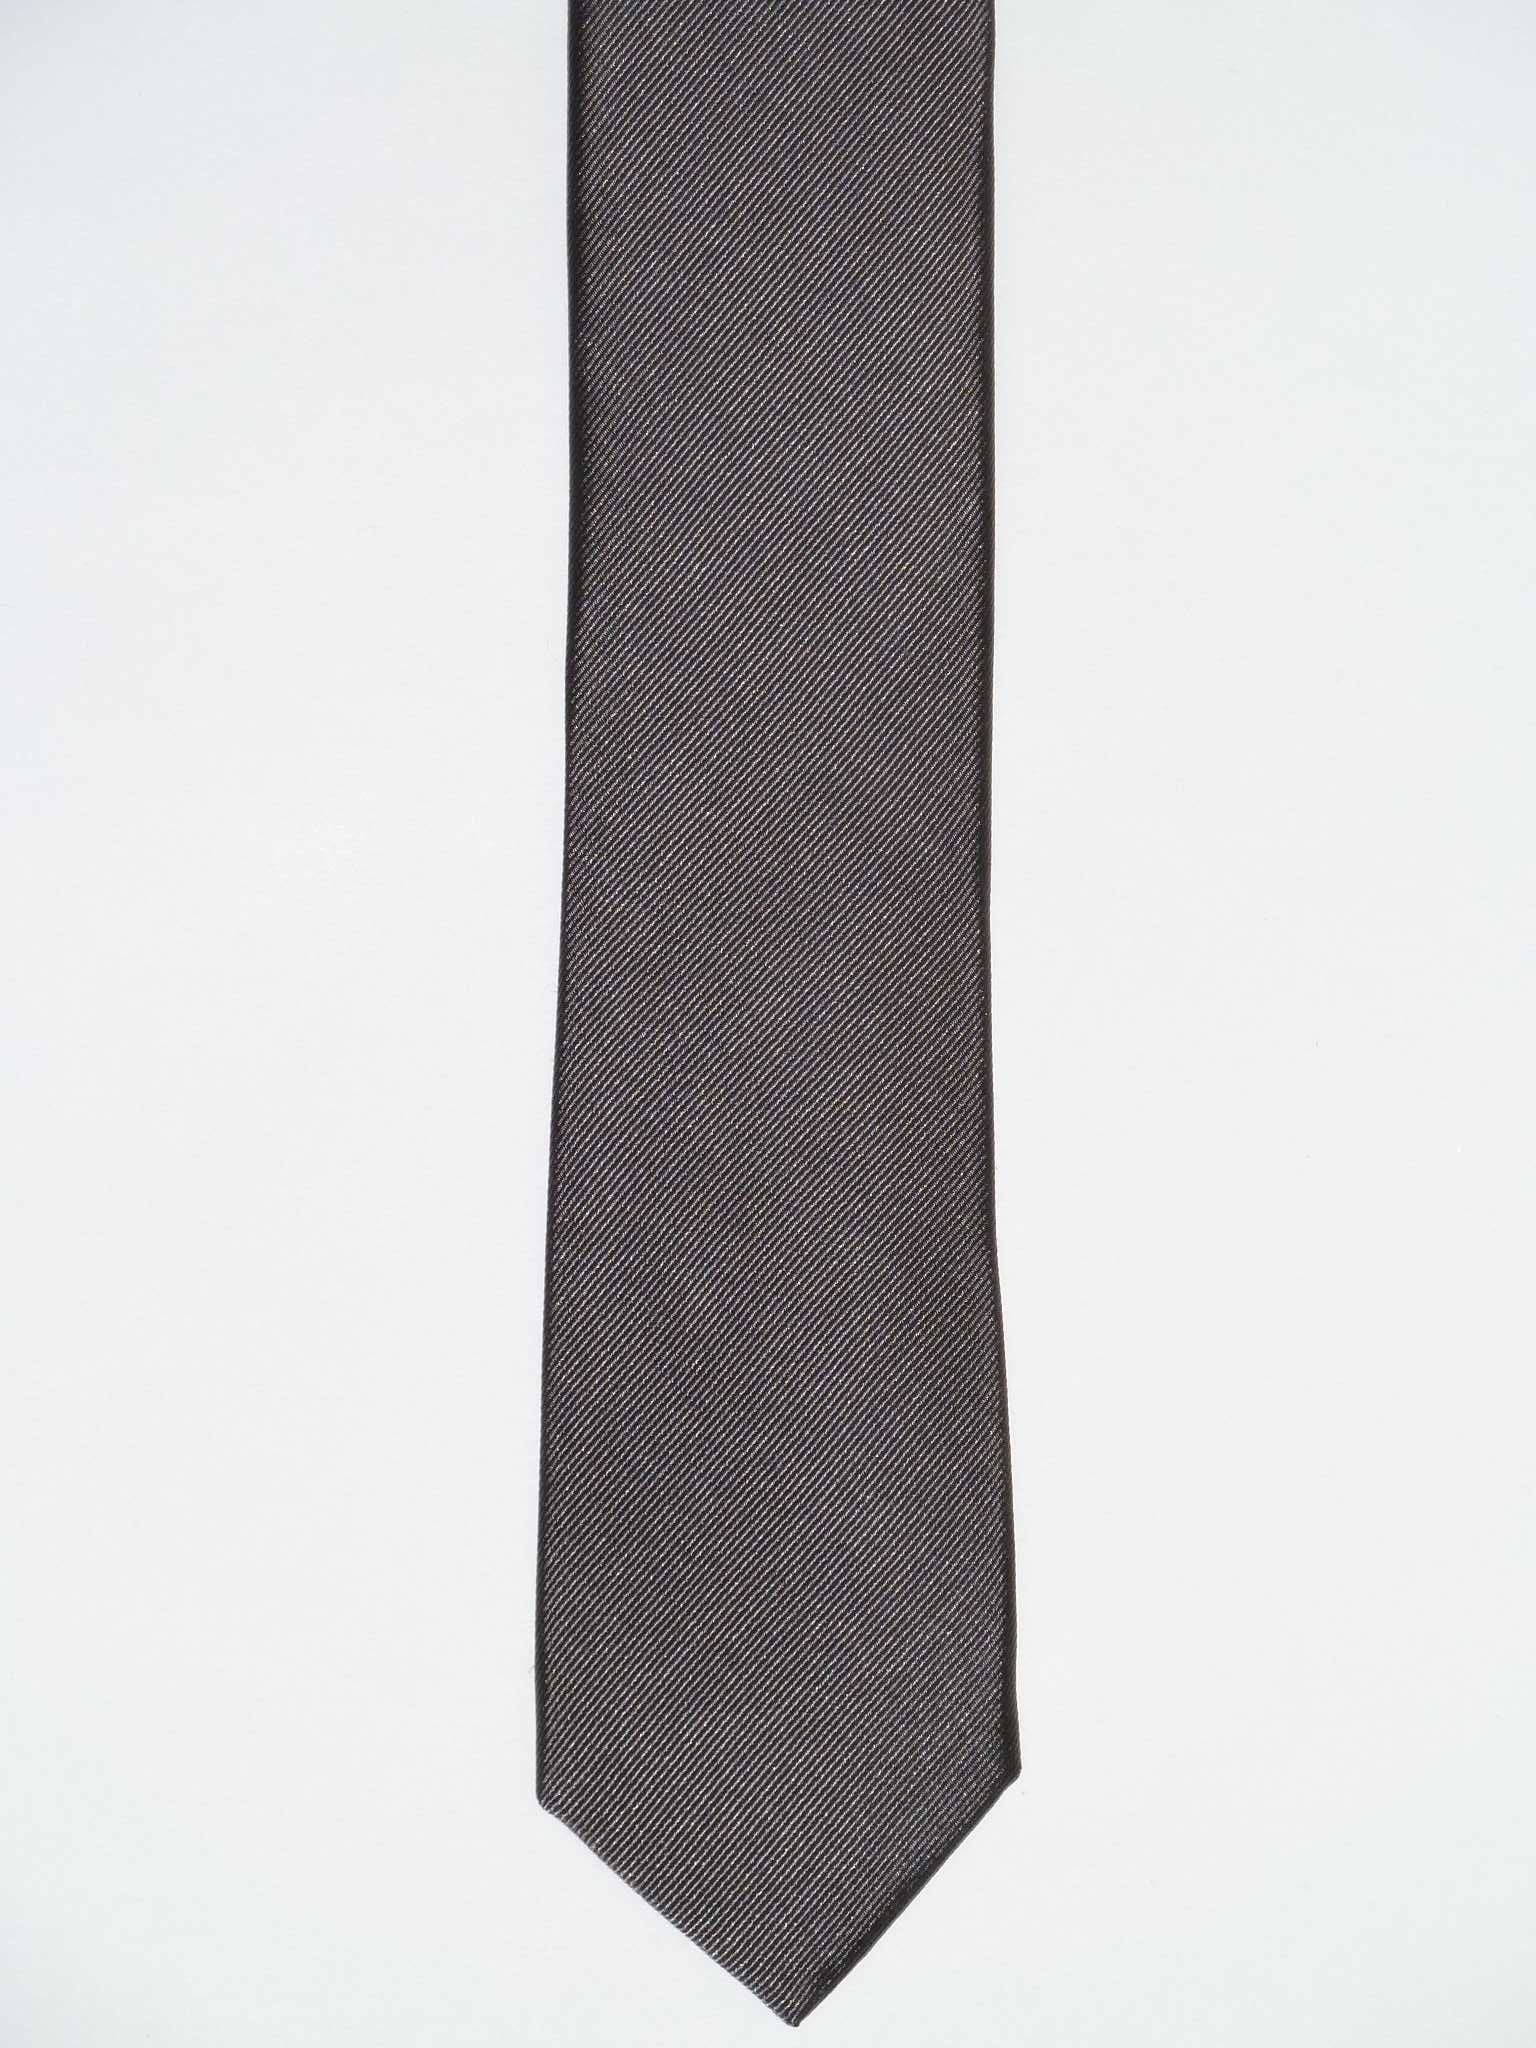 Krawatte, 100% Seide, 6cm slim, Ripps, Grau MAICA – Krawattenfabrik